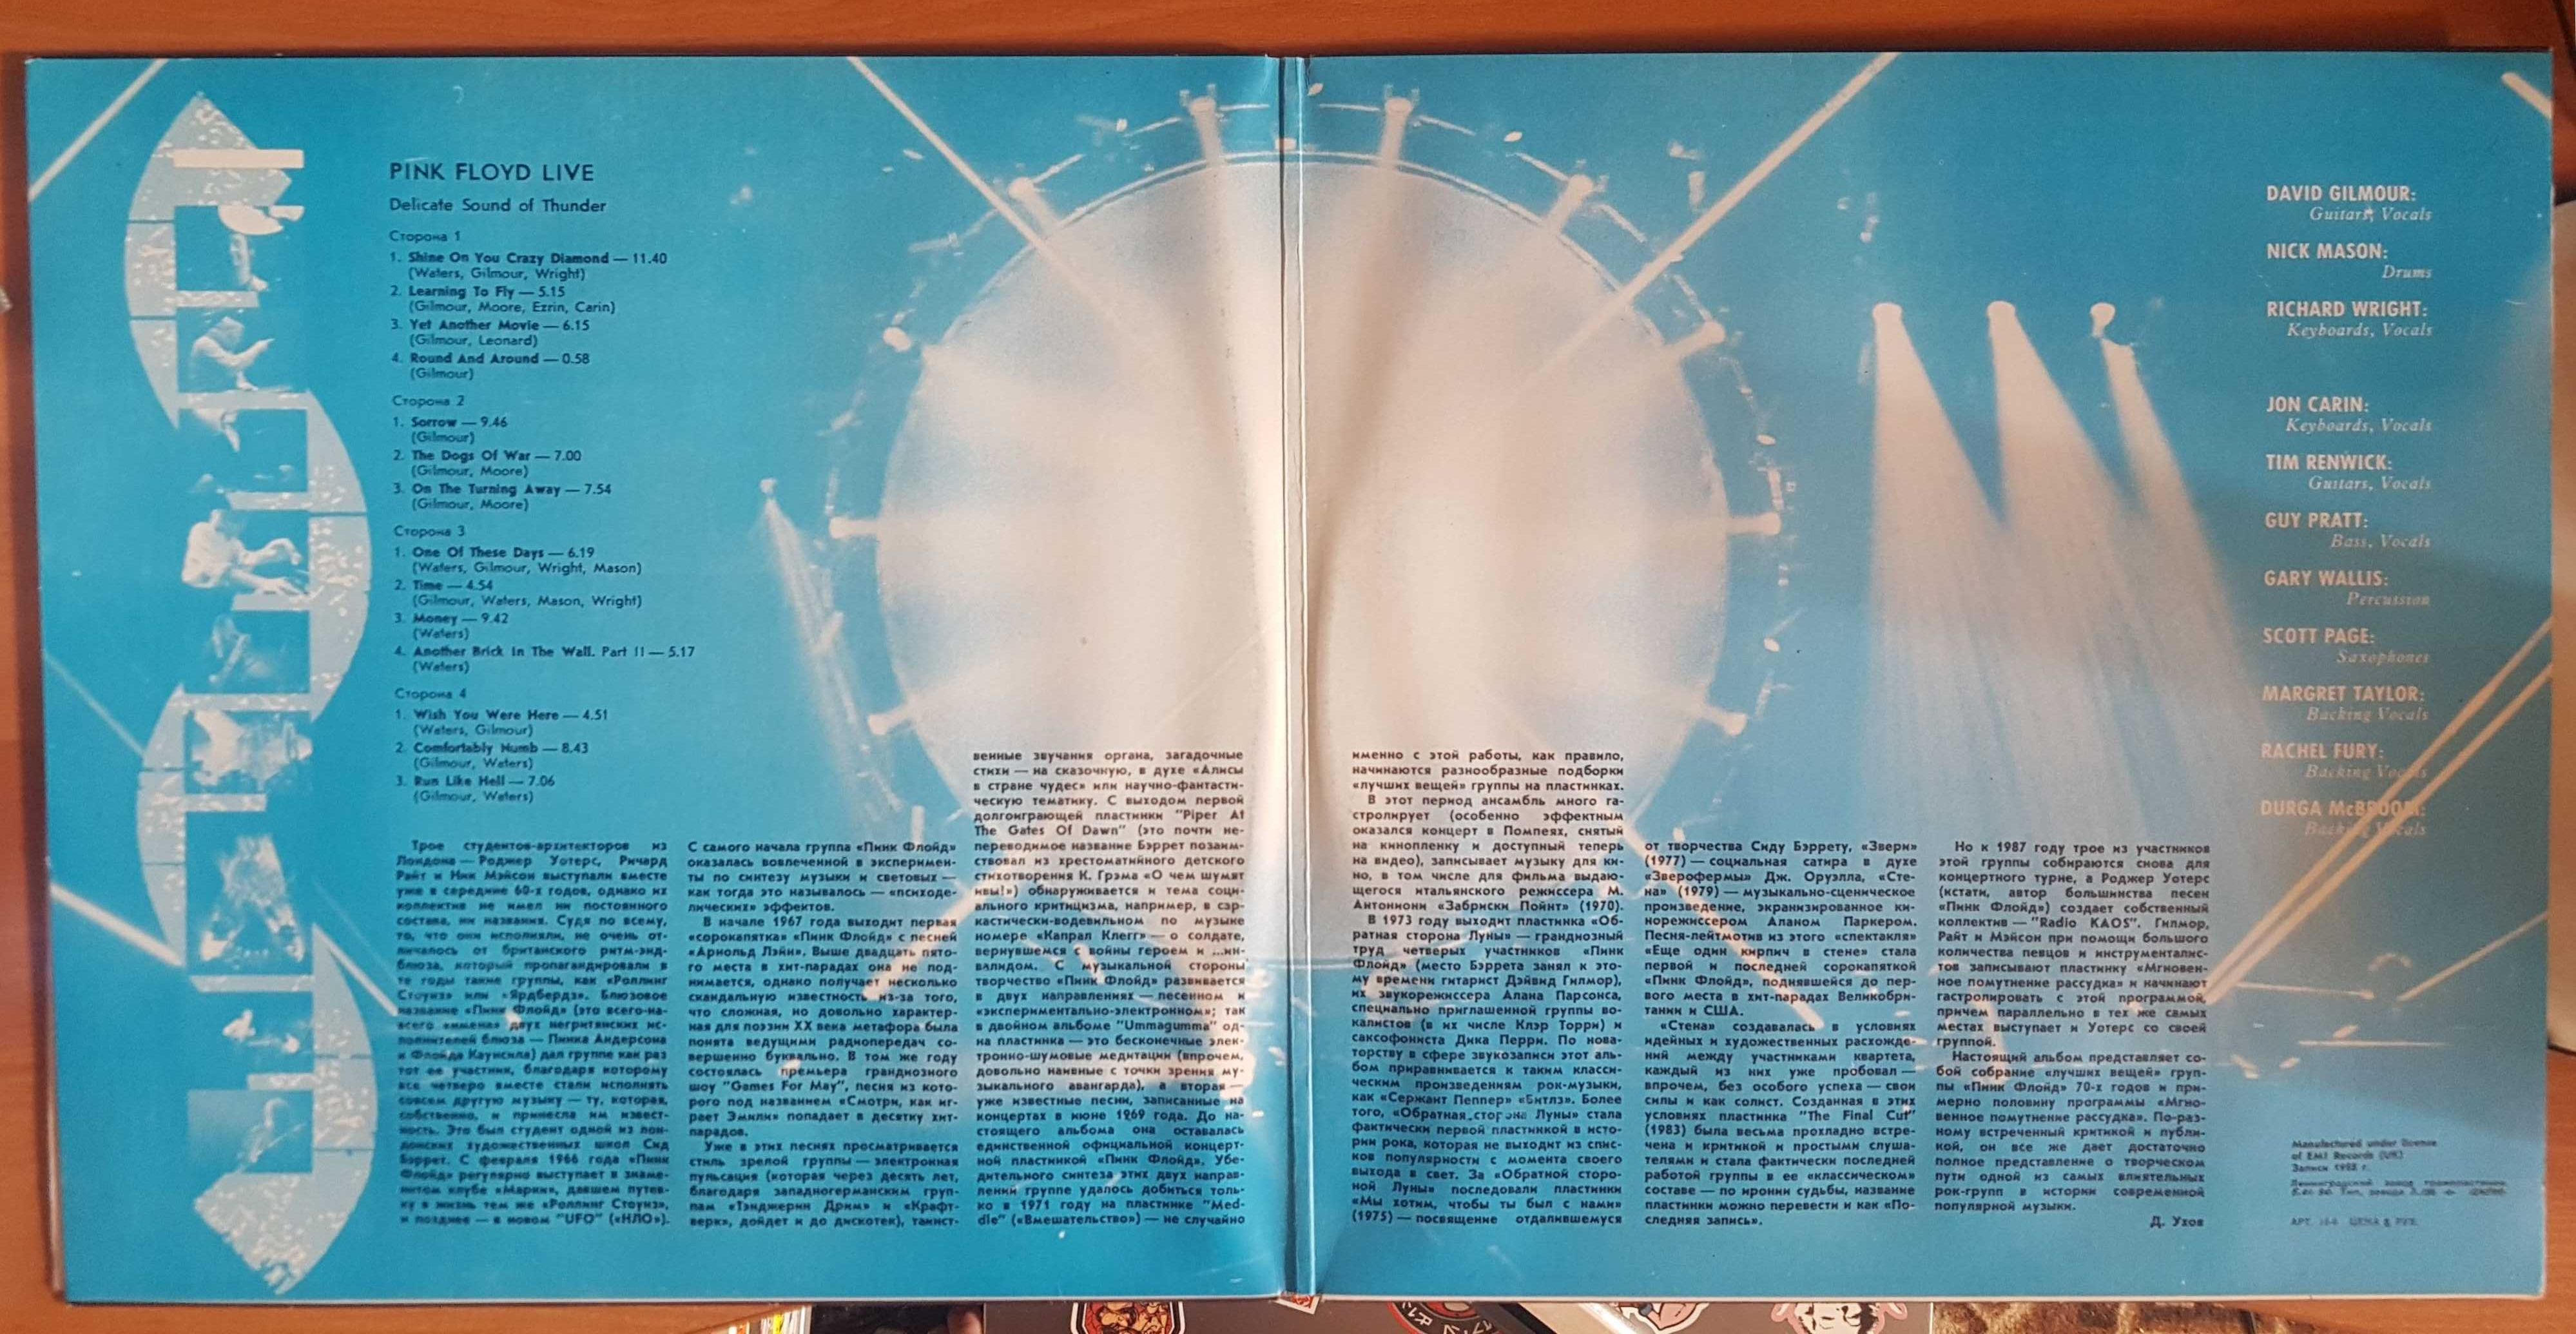 Pink Floyd – Delicate Sound Of Thunder 1990 2LP/ vinyl / платівки